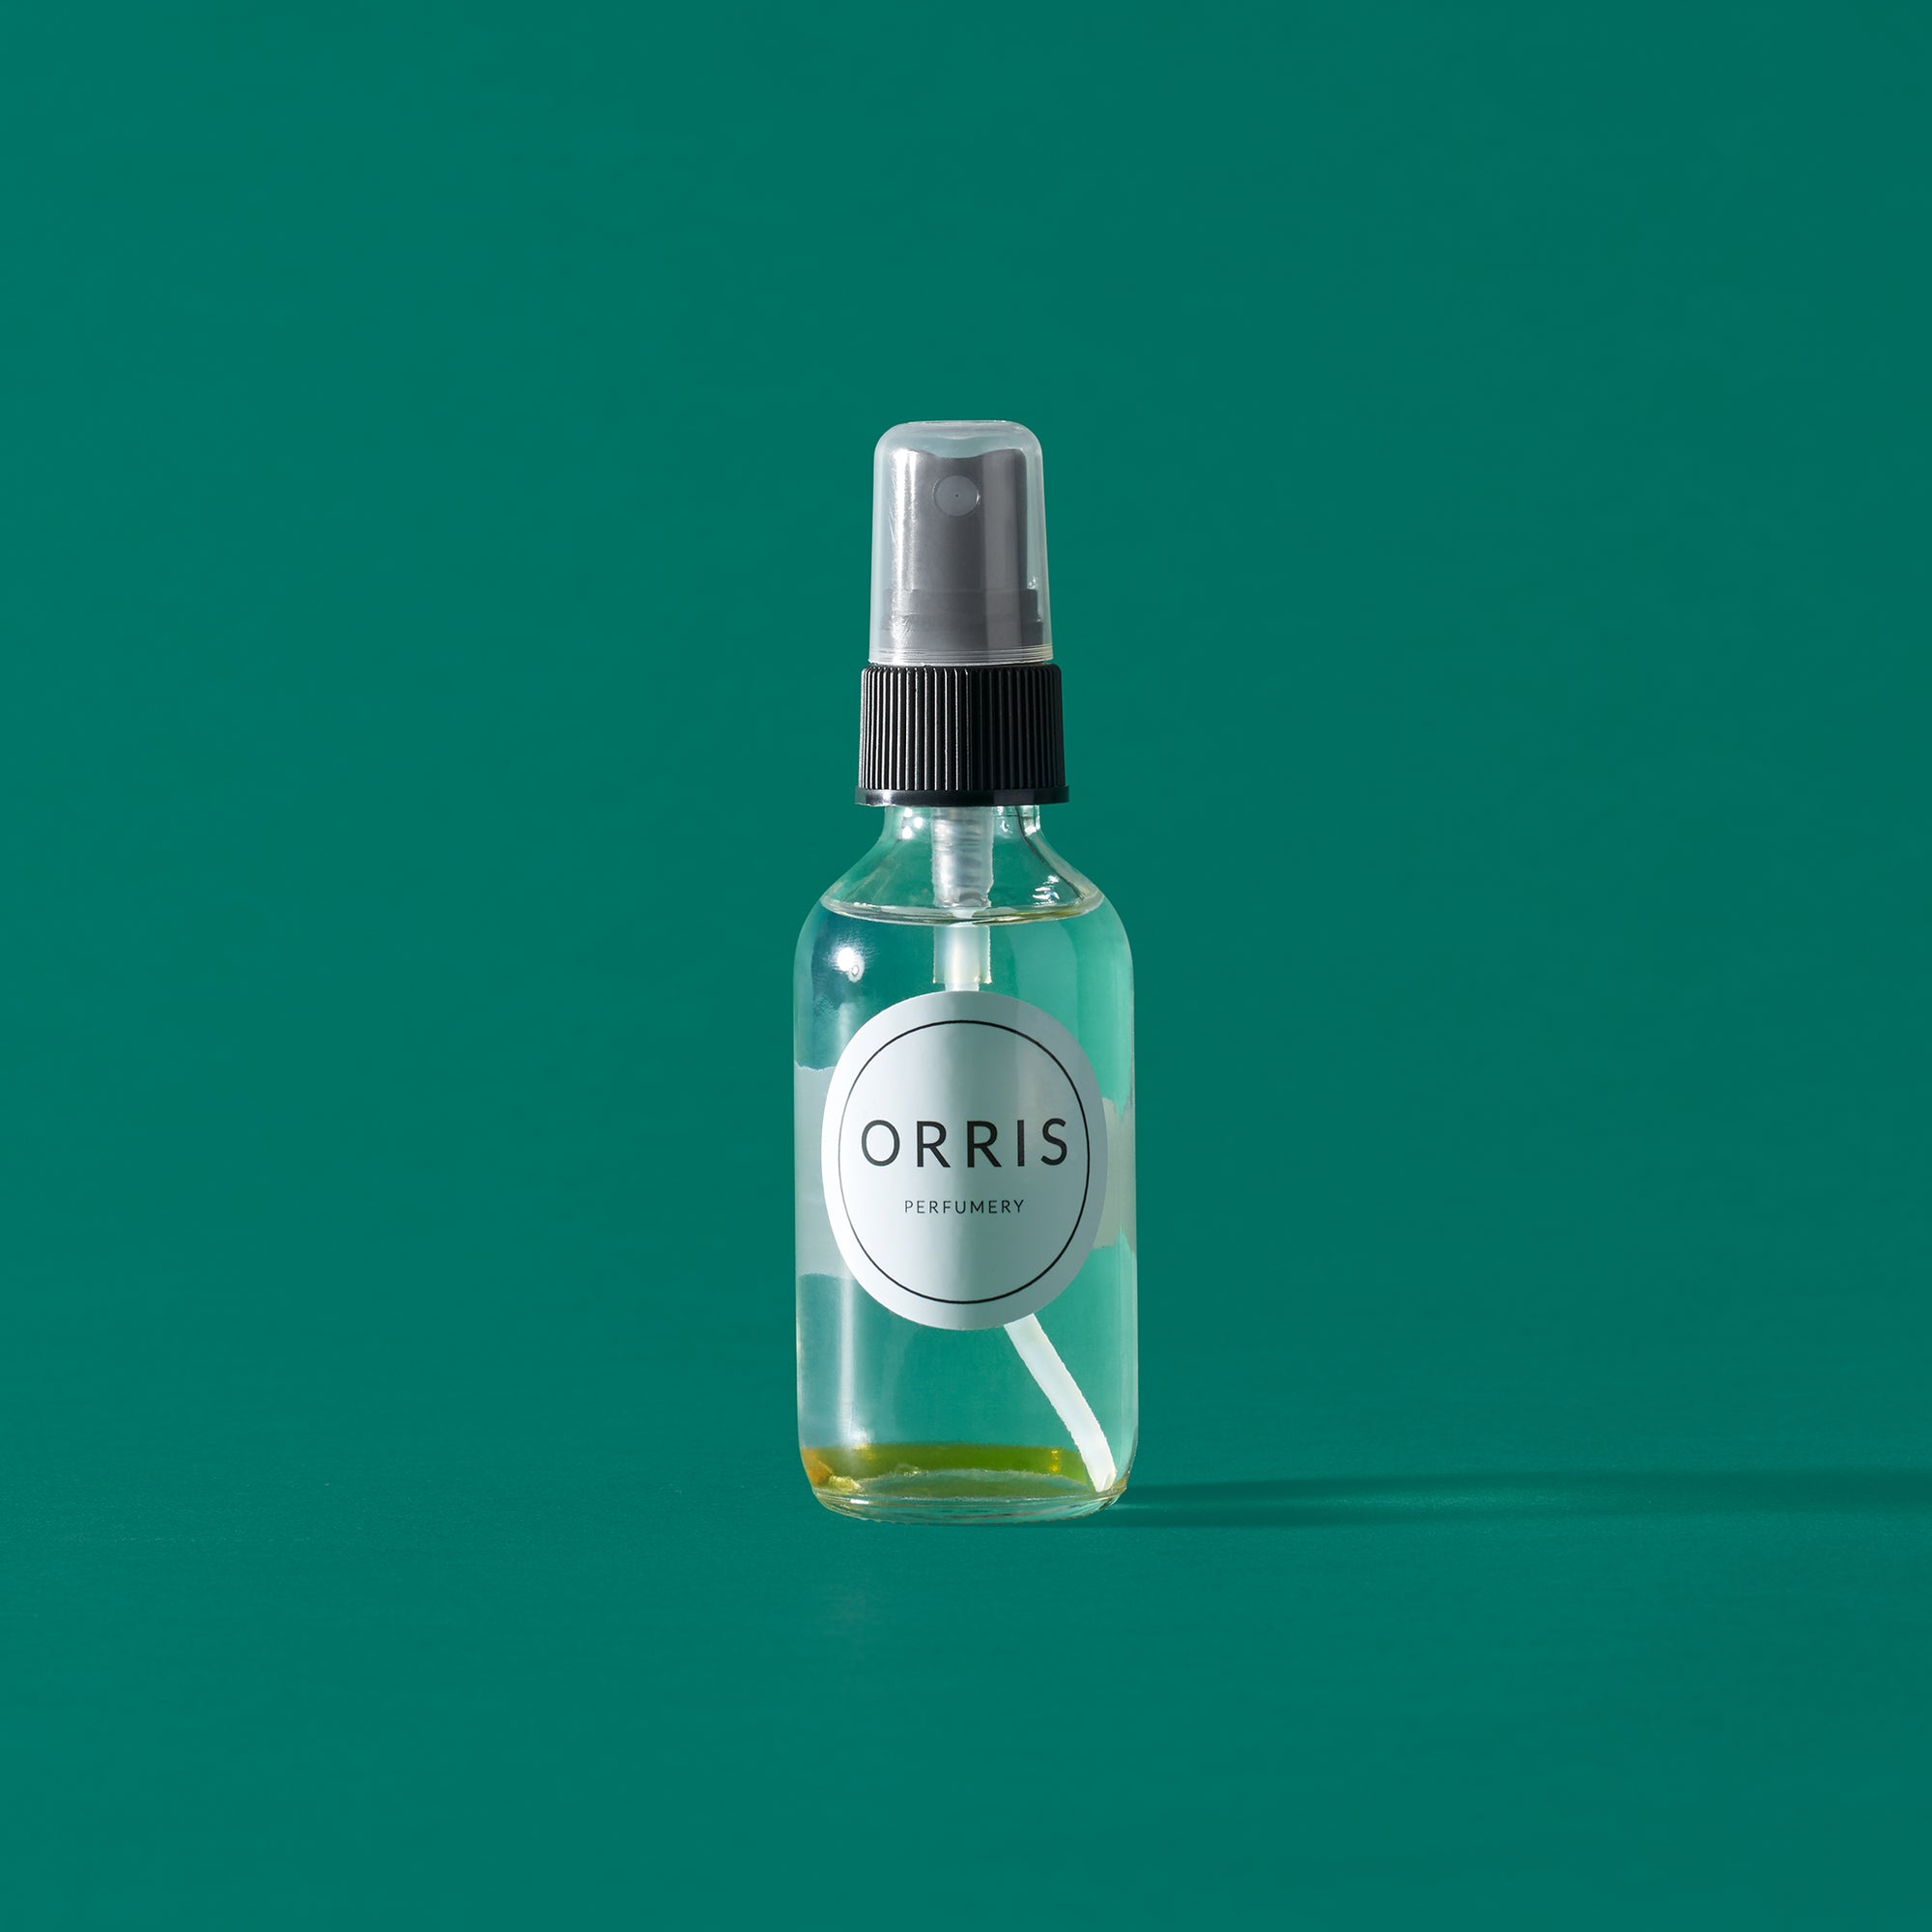 Orris Hand Sanitizer & Perfume